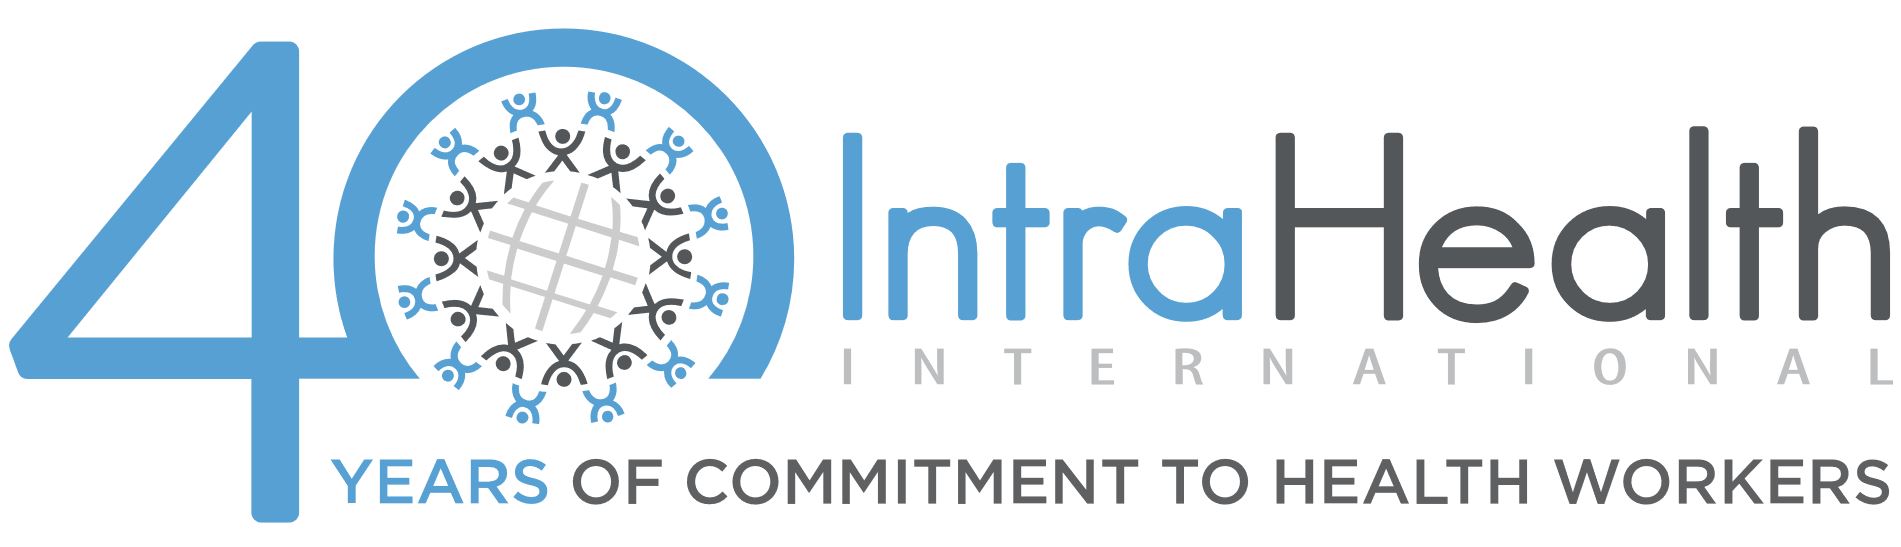 Intrahealth Logo